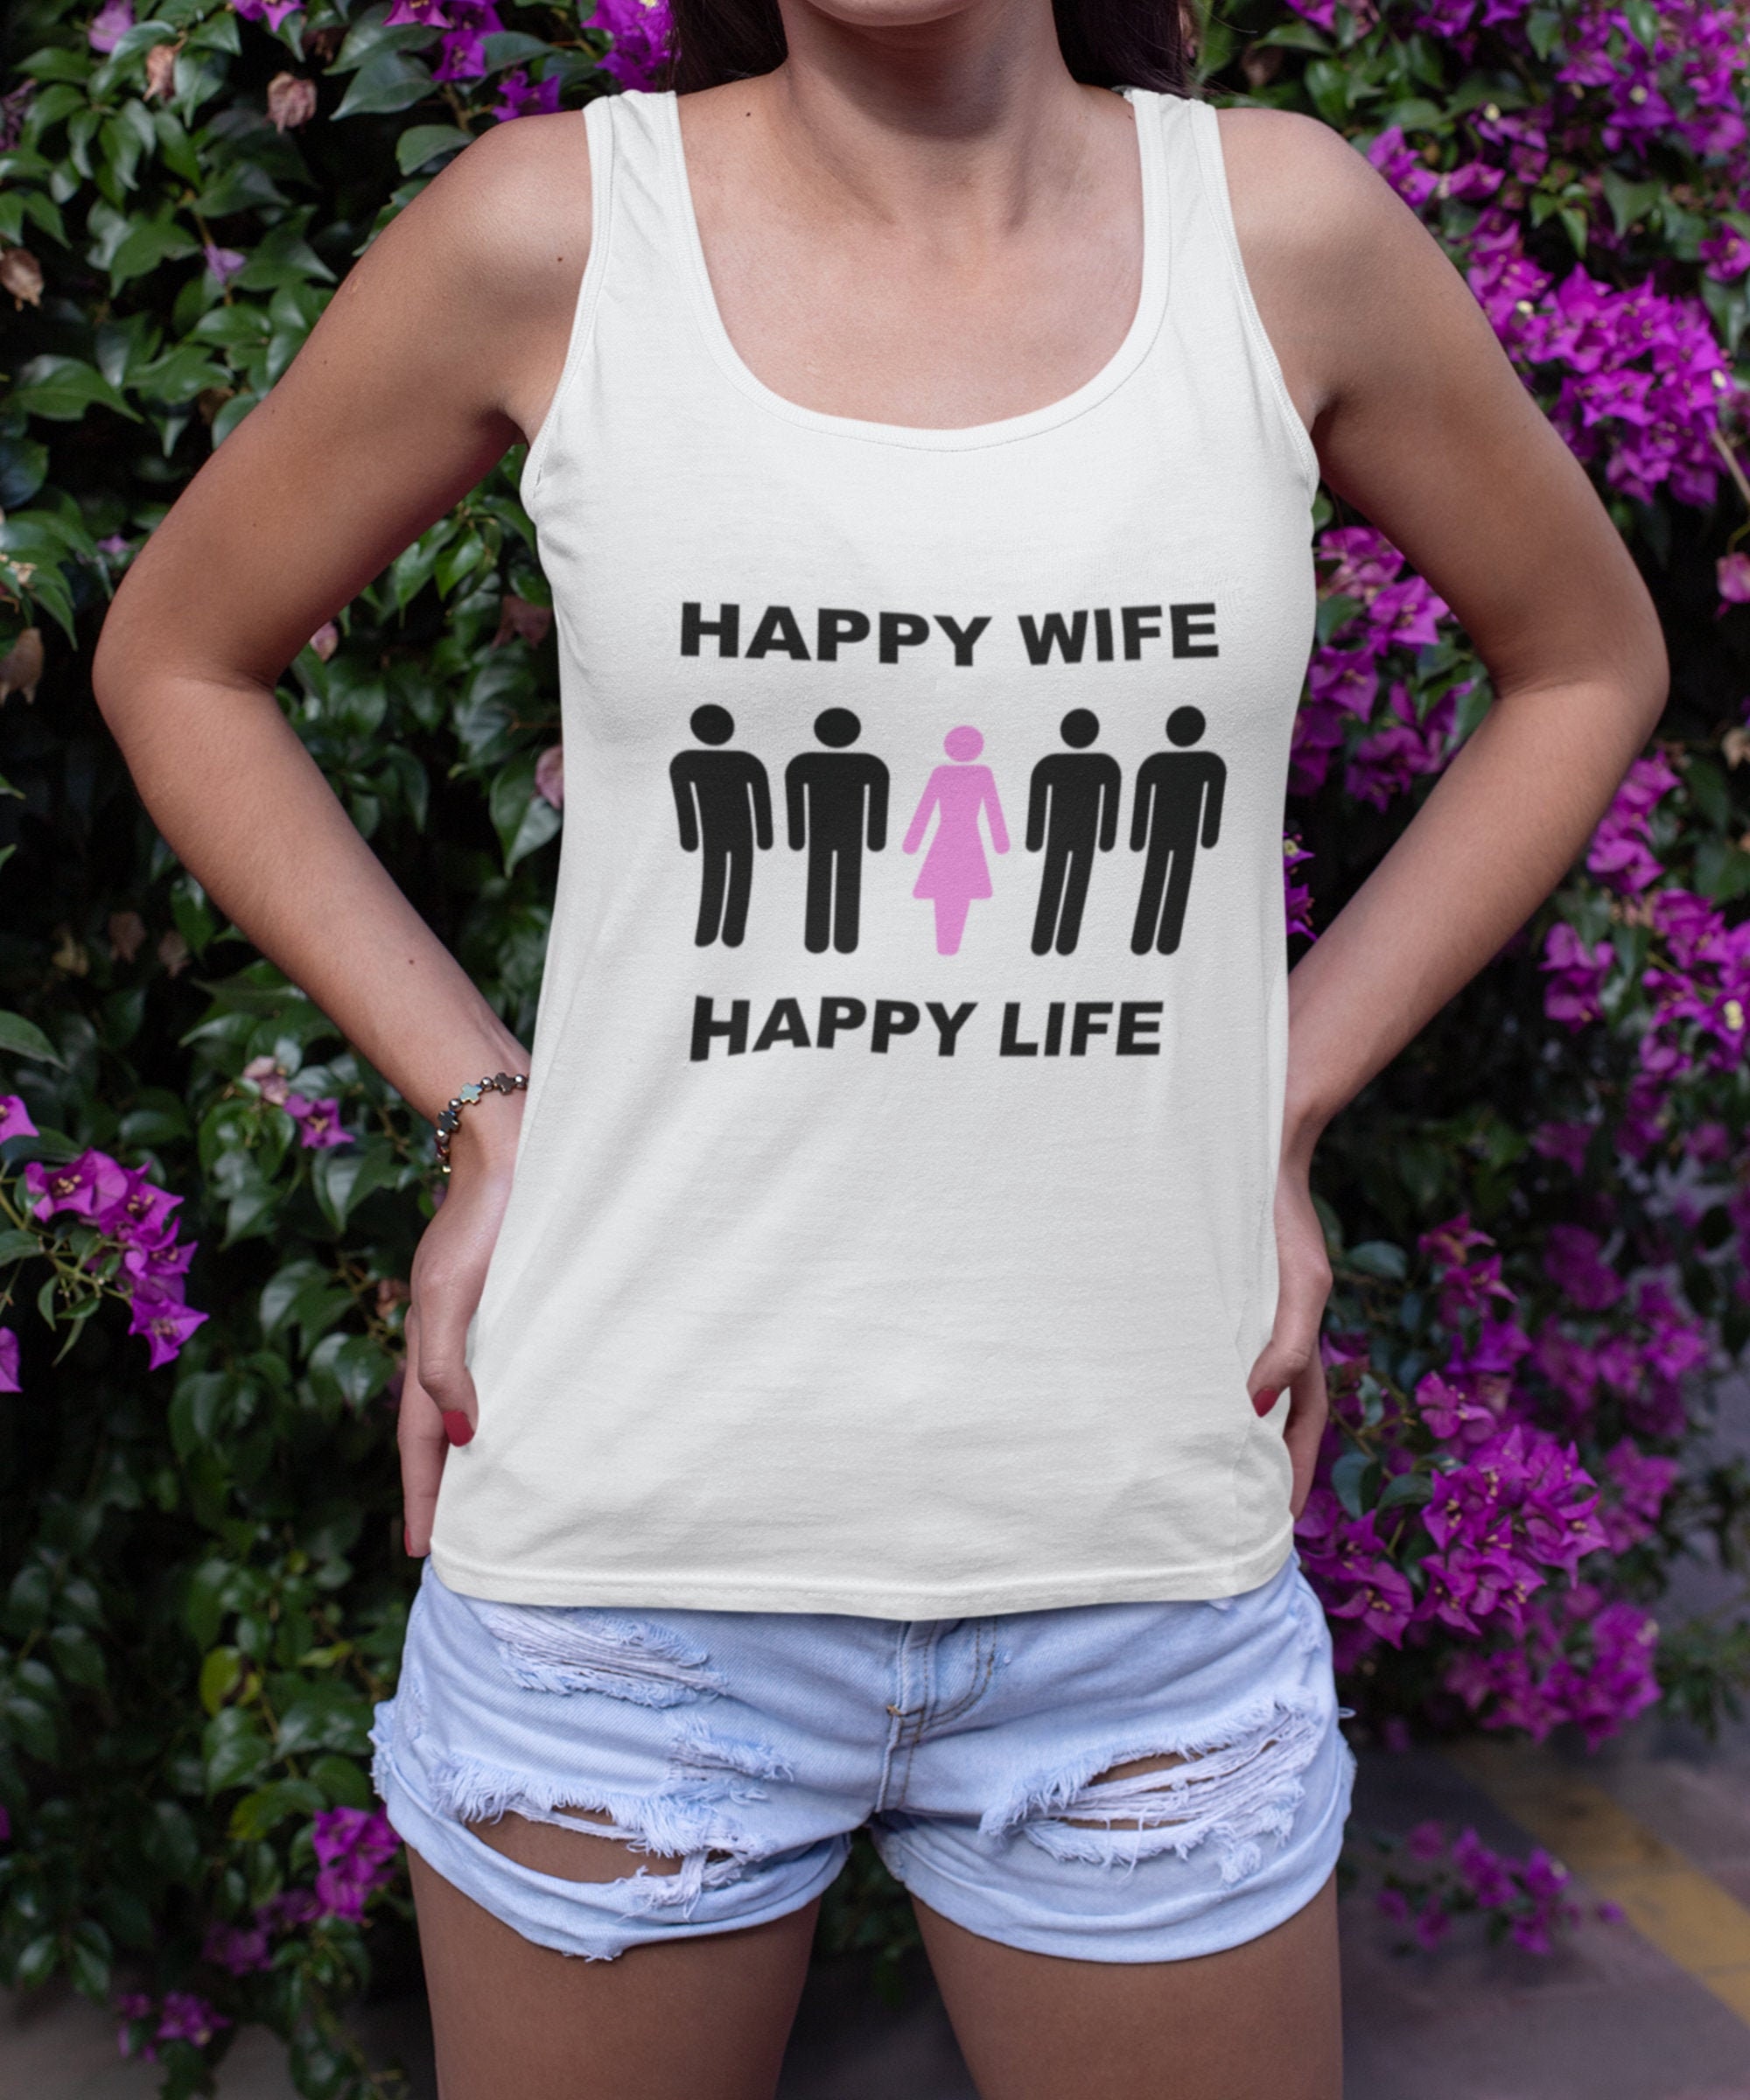 Hotwife Clothing Gangbang Shirt Tank Top Happy Wife Happy image